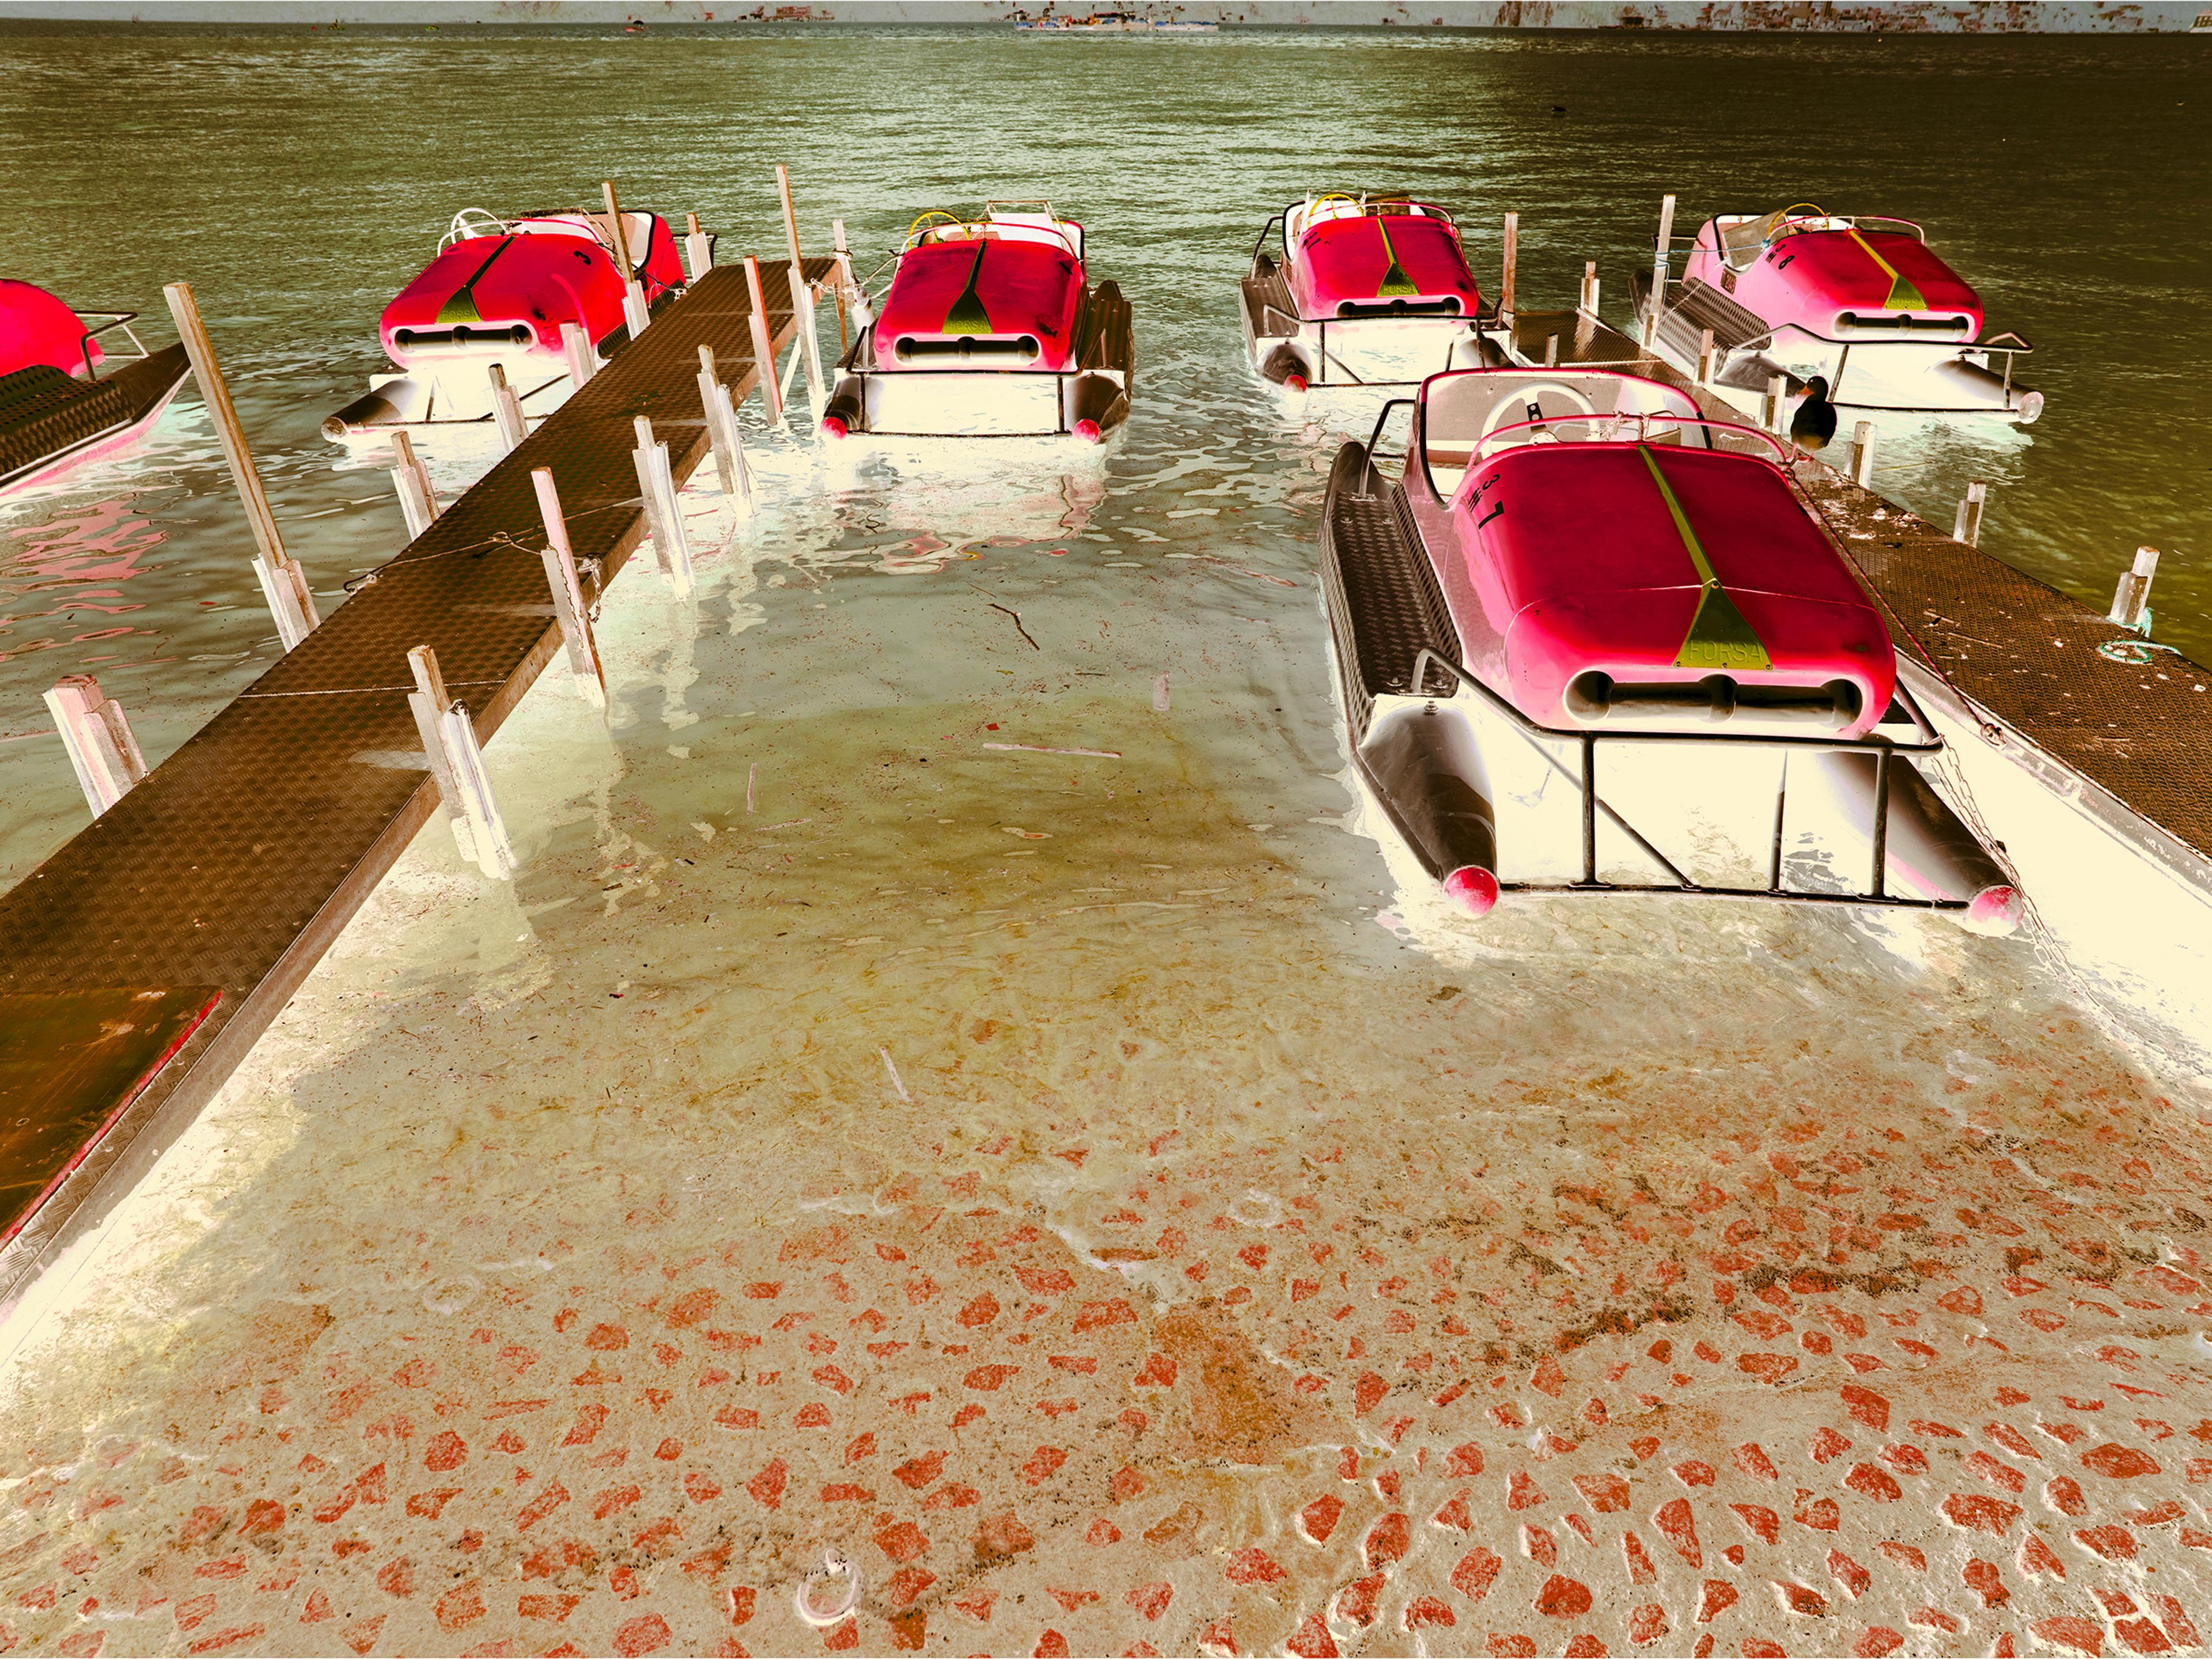 artwork Paddelboots at Lago di Lugano by Ivo von Renner